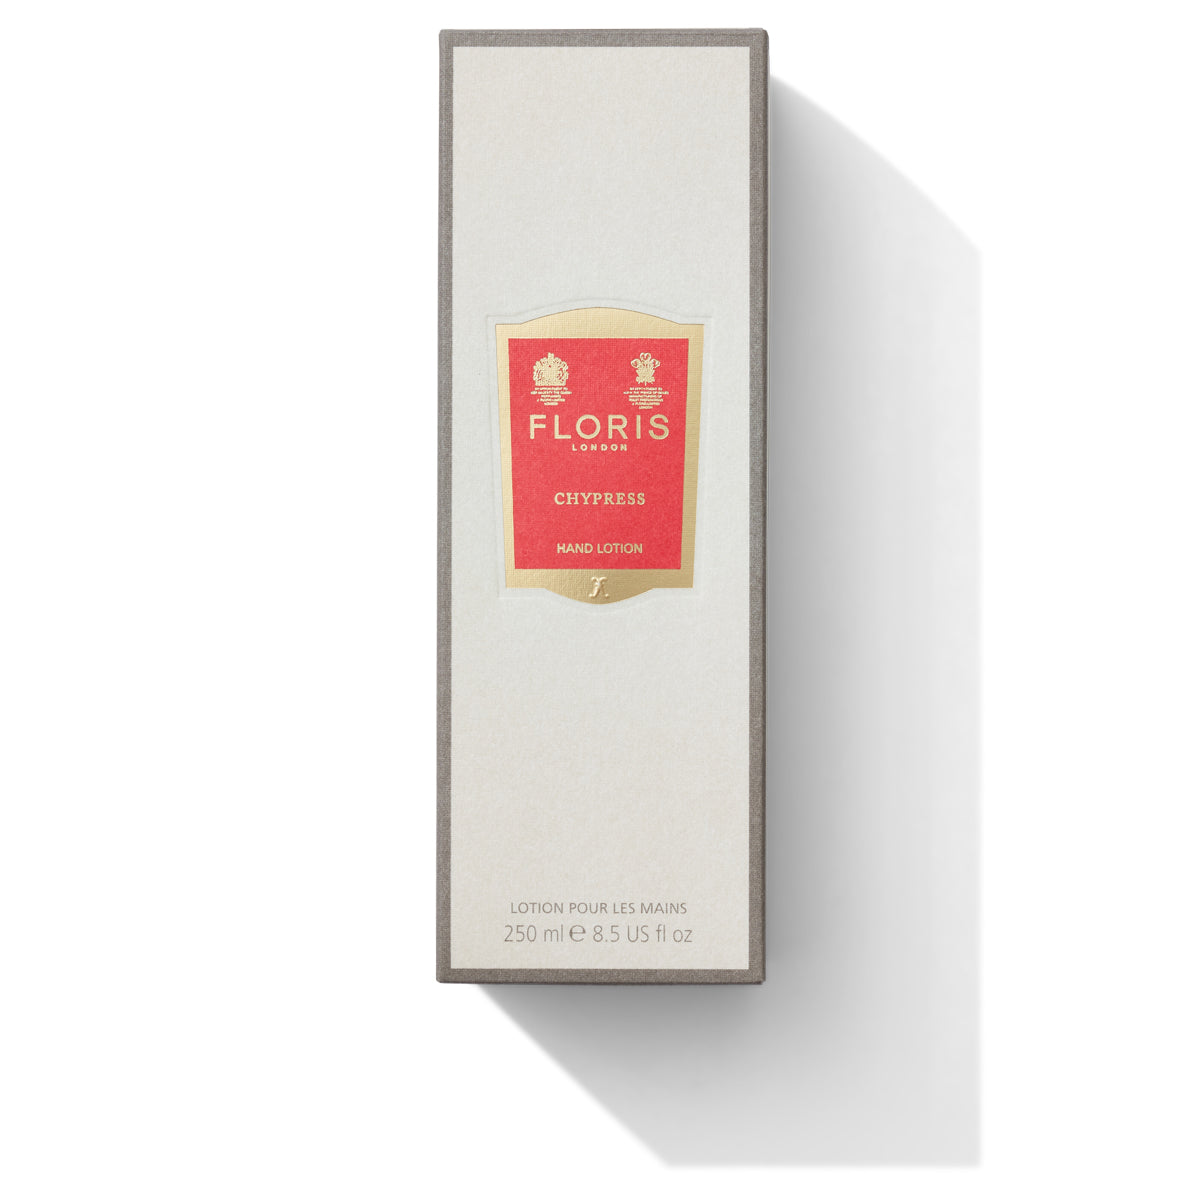 Floris London Chypress - Luxury Hand Lotion 250ml Packaging.